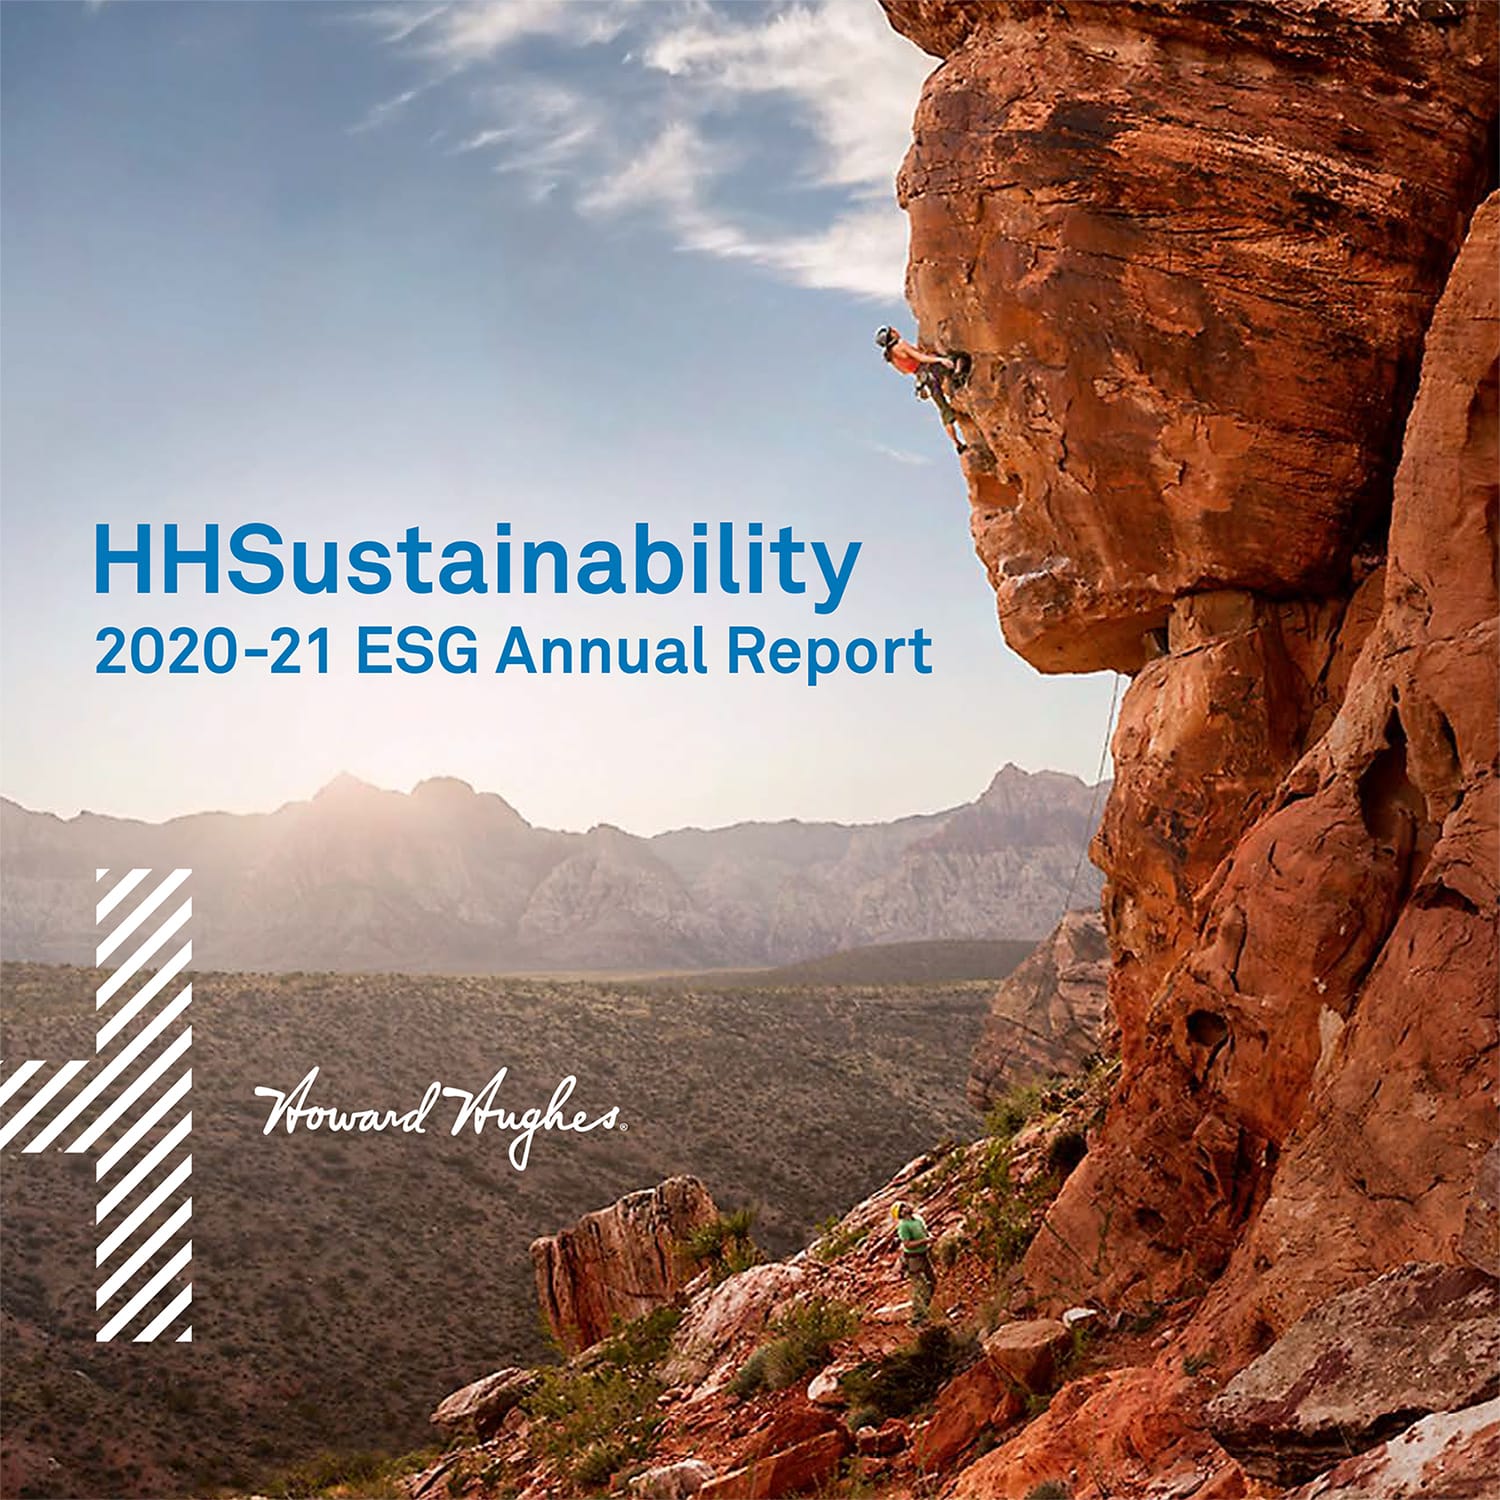 HHSustainability 2020-2021 EST Annual Report